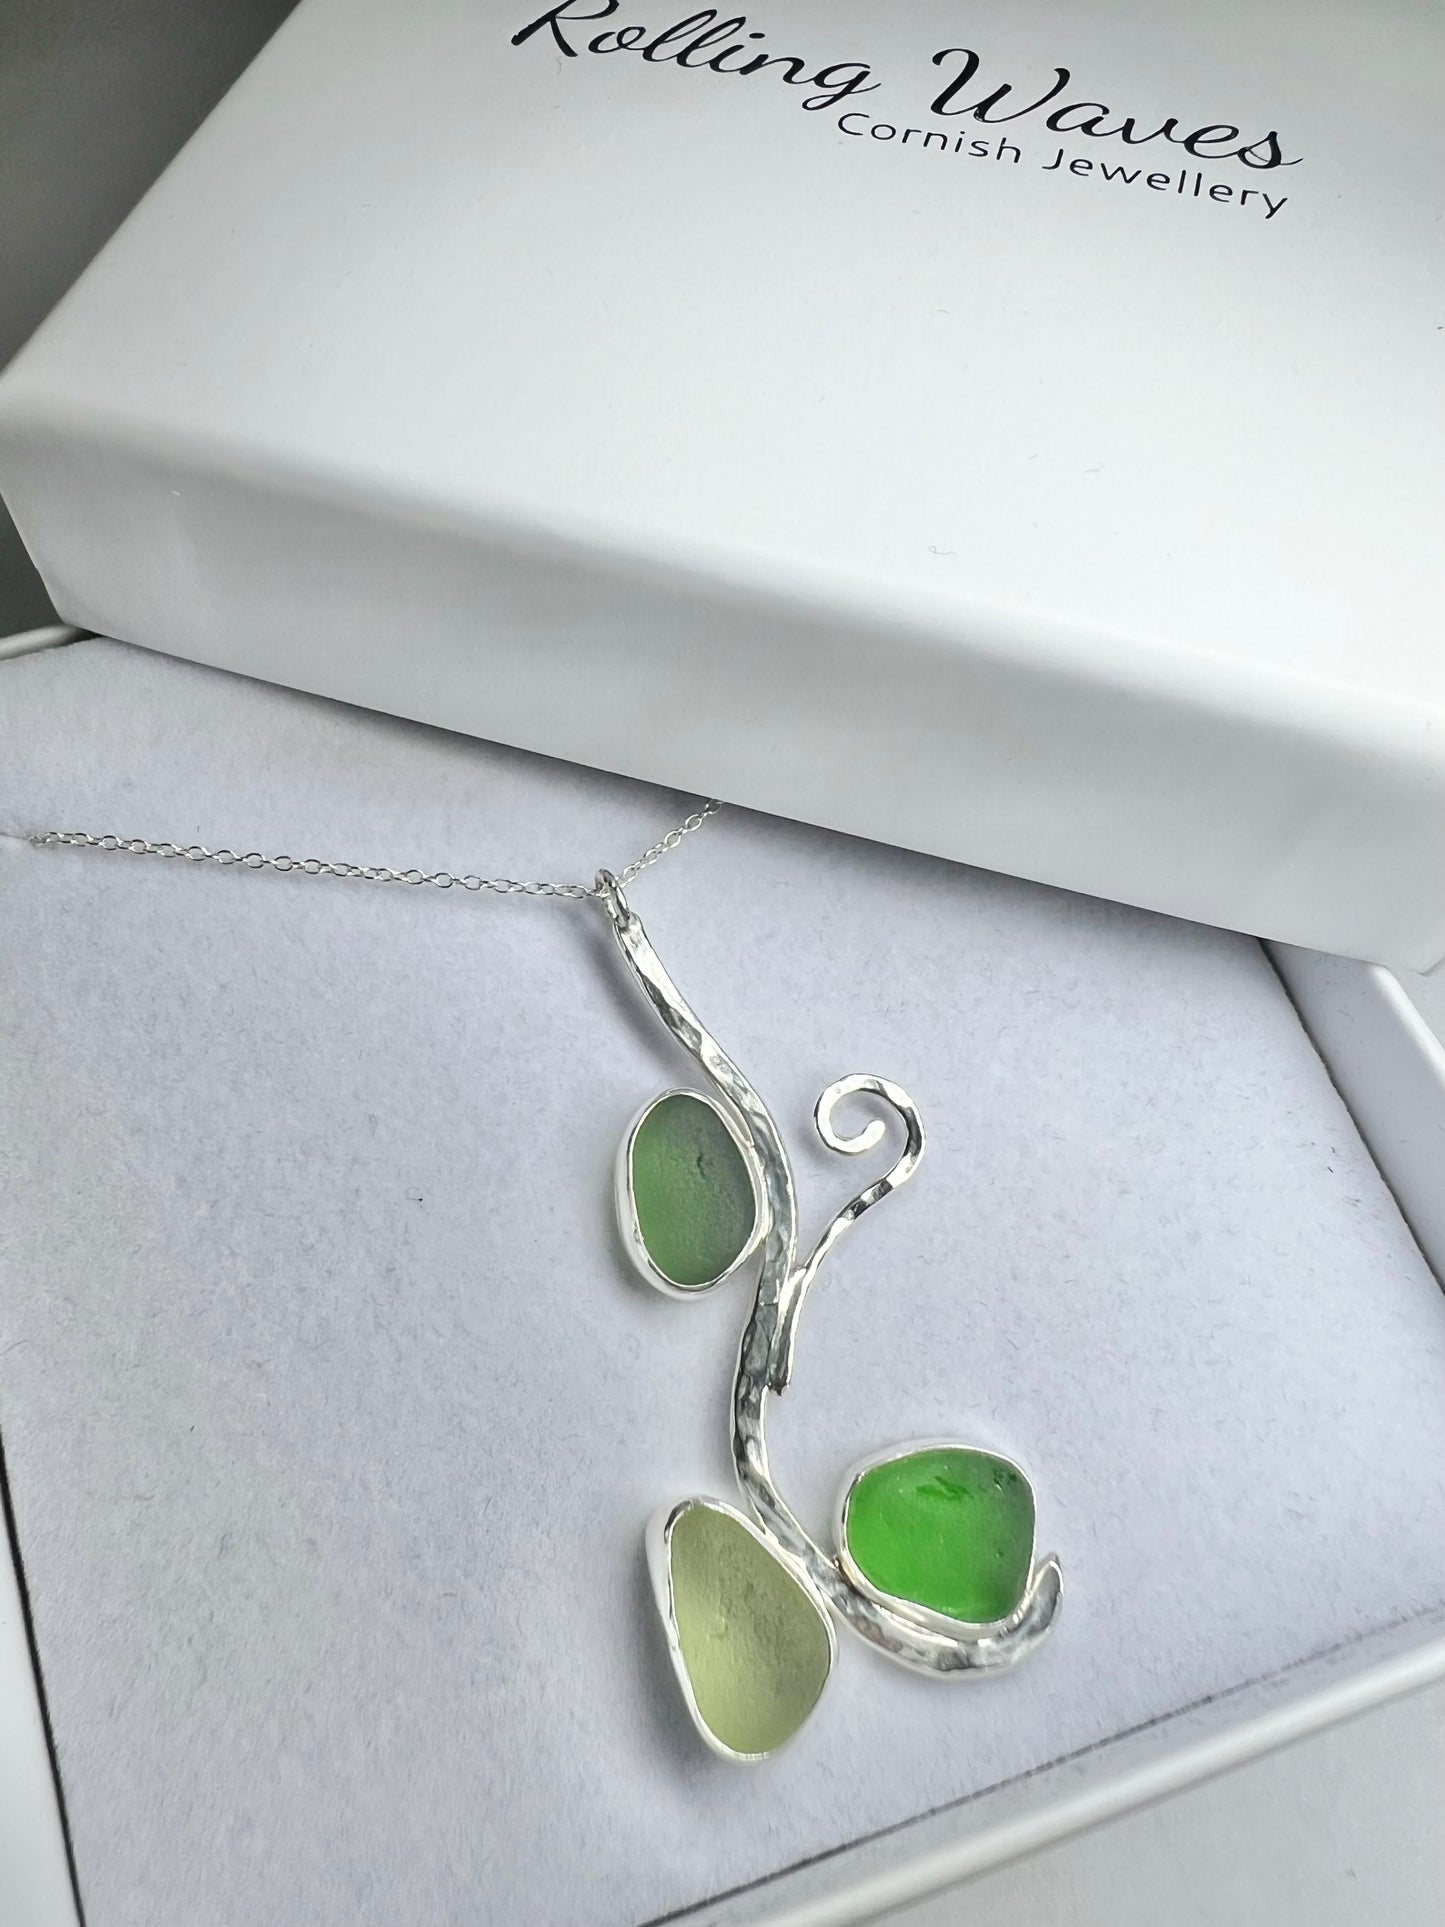 Cornish seaglass botanical necklace